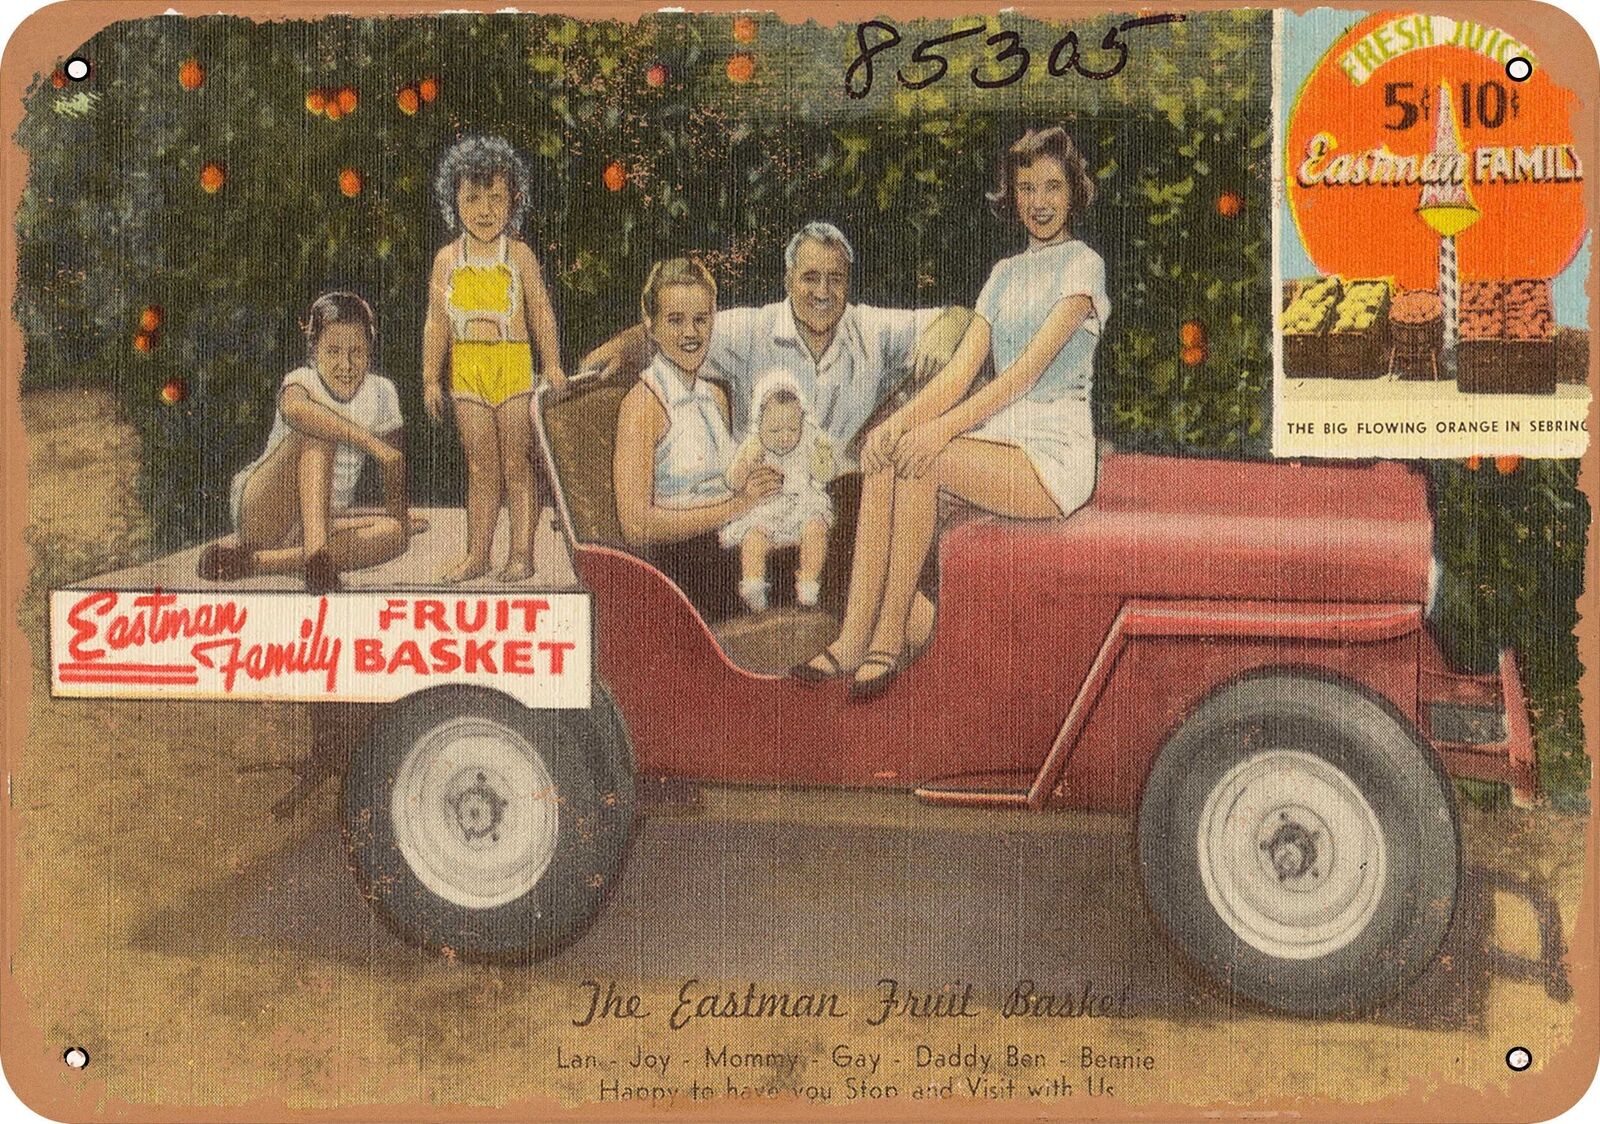 Metal Sign - Florida Postcard - The Eastman Fruit Basket, Lan - Joy - Mommy - D